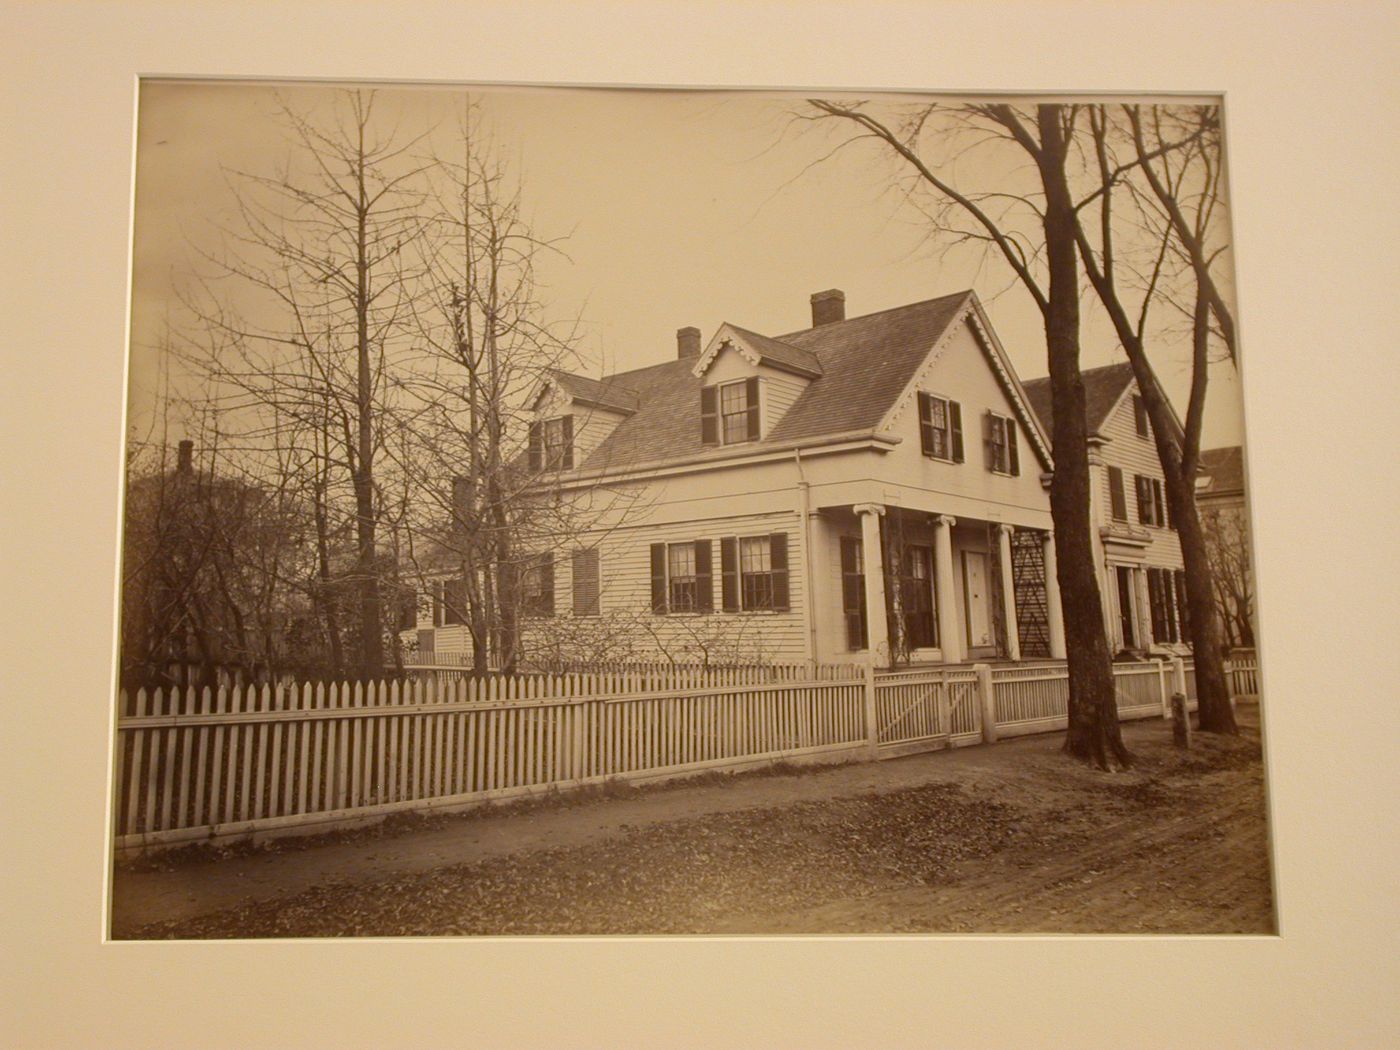 View of wooden clapboard house on street, white picket fences surrounding houses, Boston, Massachusetts